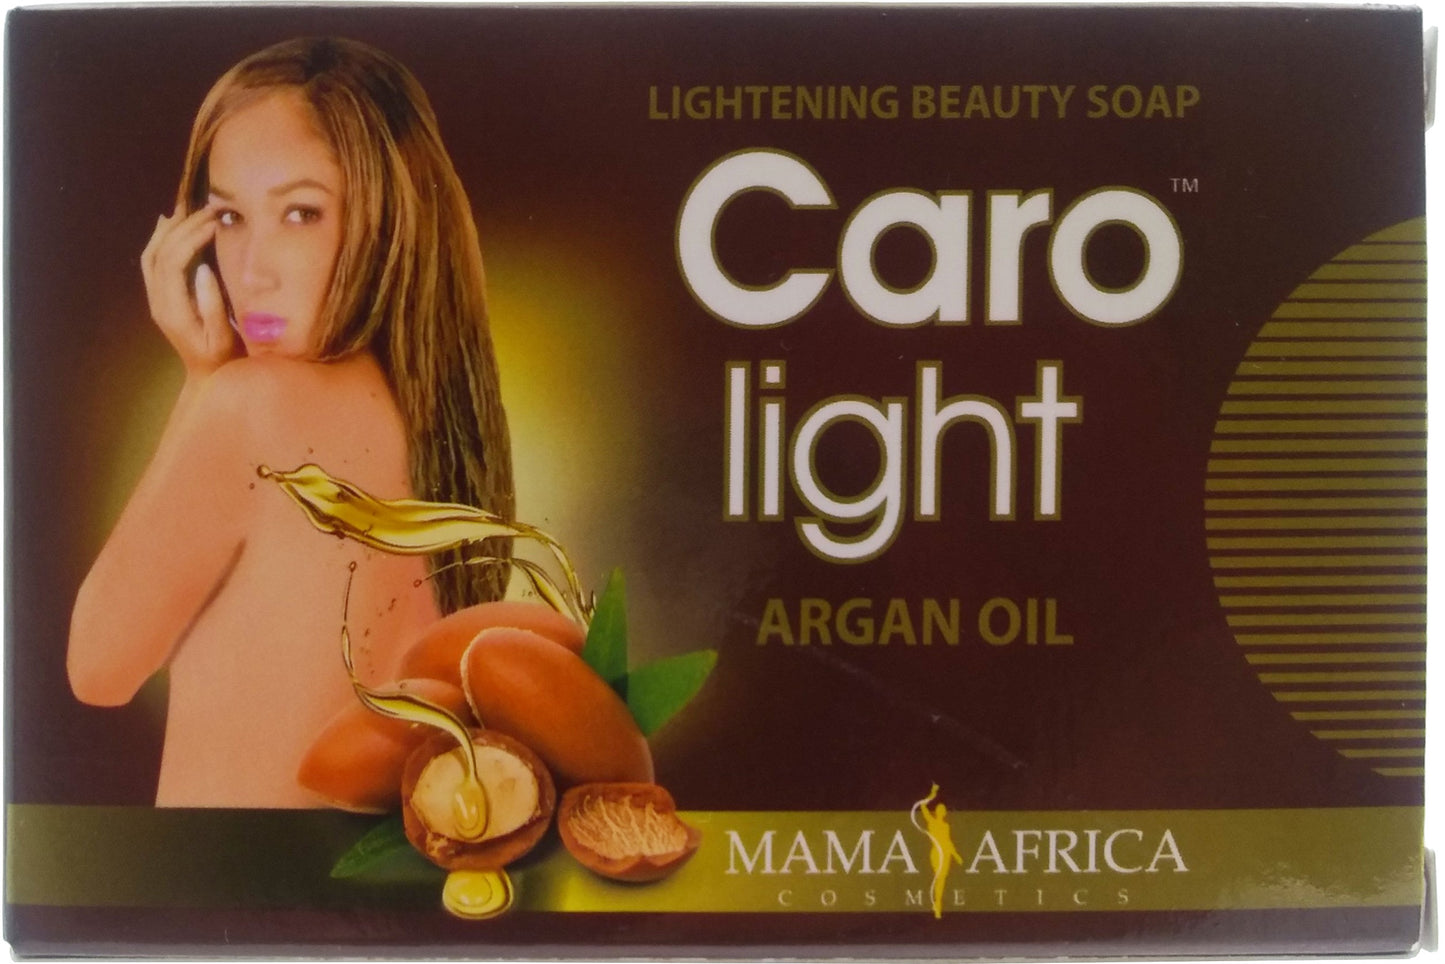 (COSMETICS SKIN CARE) MA Caro Light Lightening Beauty Soap Argan Oil 200 gr.